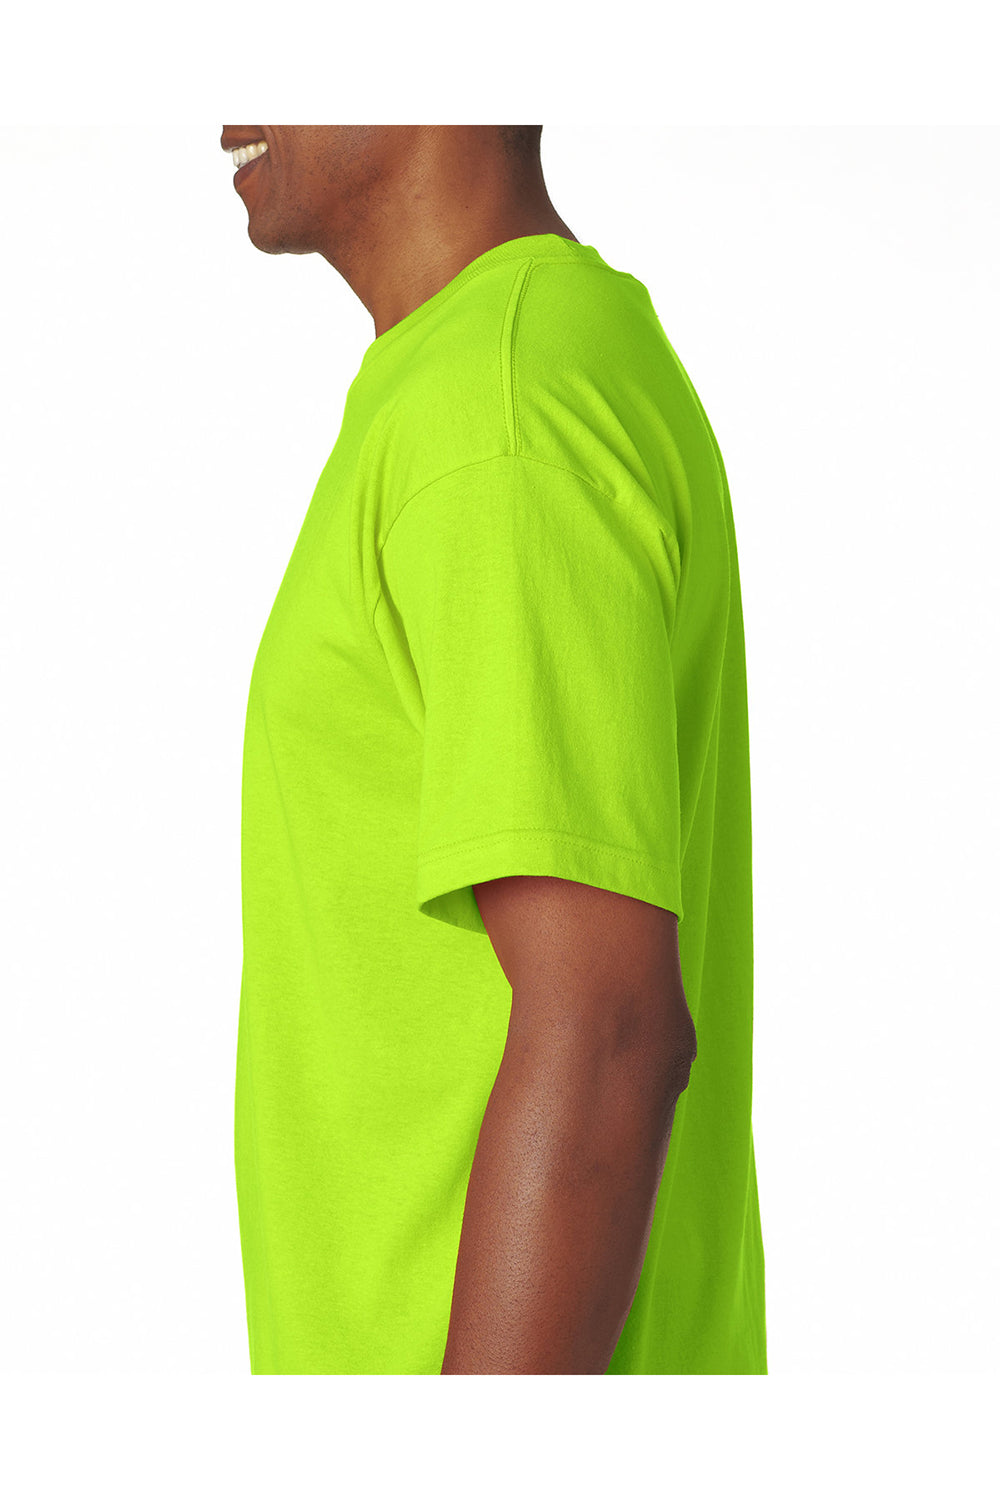 Bayside BA5100 Mens USA Made Short Sleeve Crewneck T-Shirt Lime Green Model Side